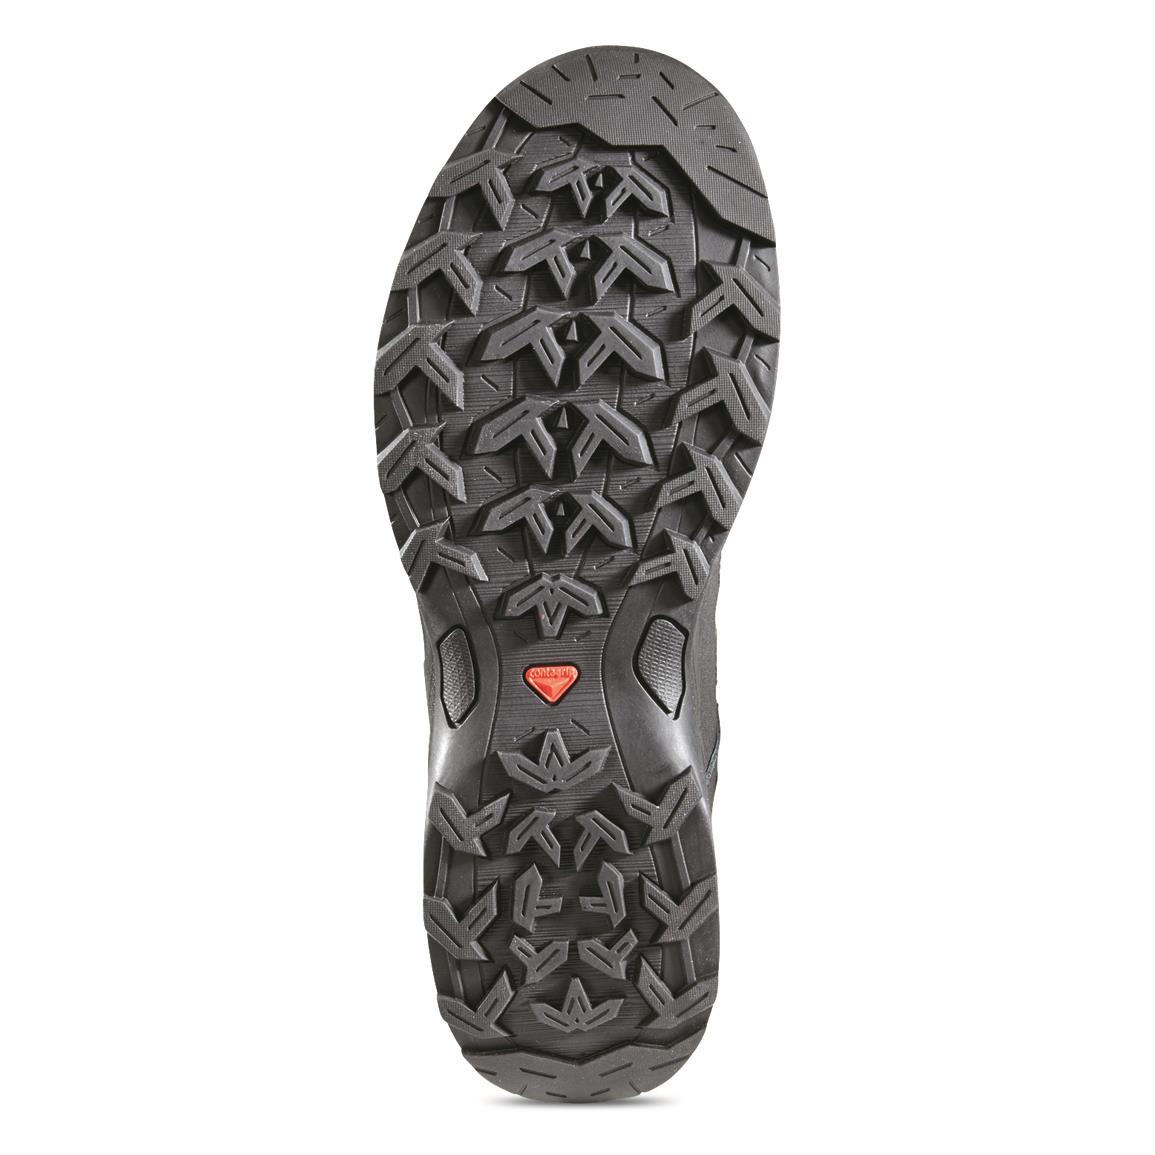 Salomon Men's Pathfinder Mid CSWP Hiking Boots - 697625, Hiking Boots ...